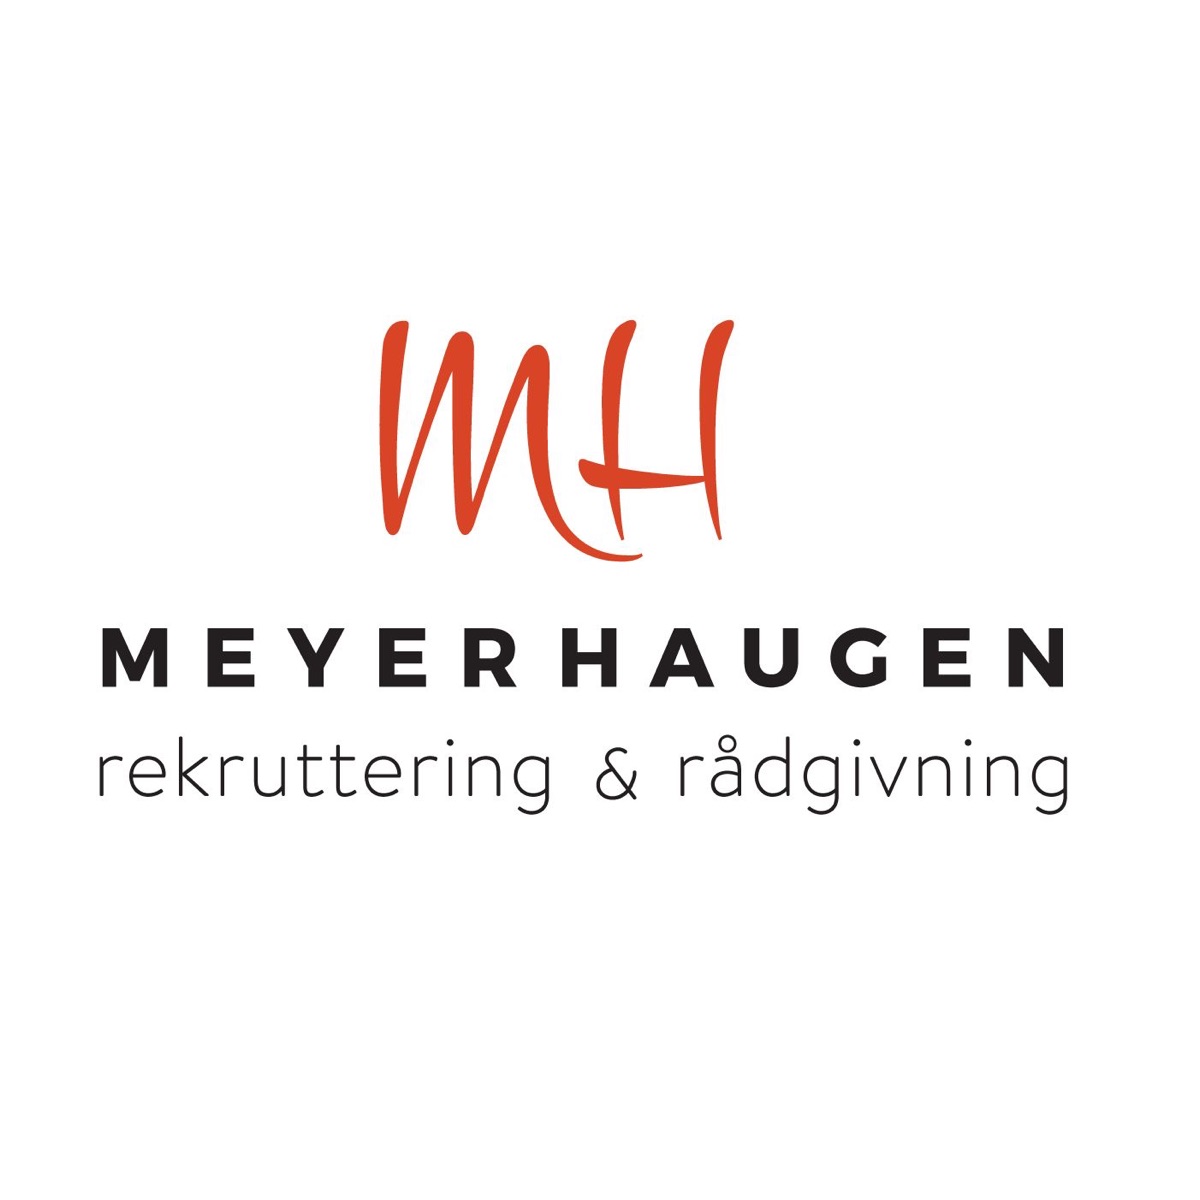 MeyerHaugens Topplederpodcast